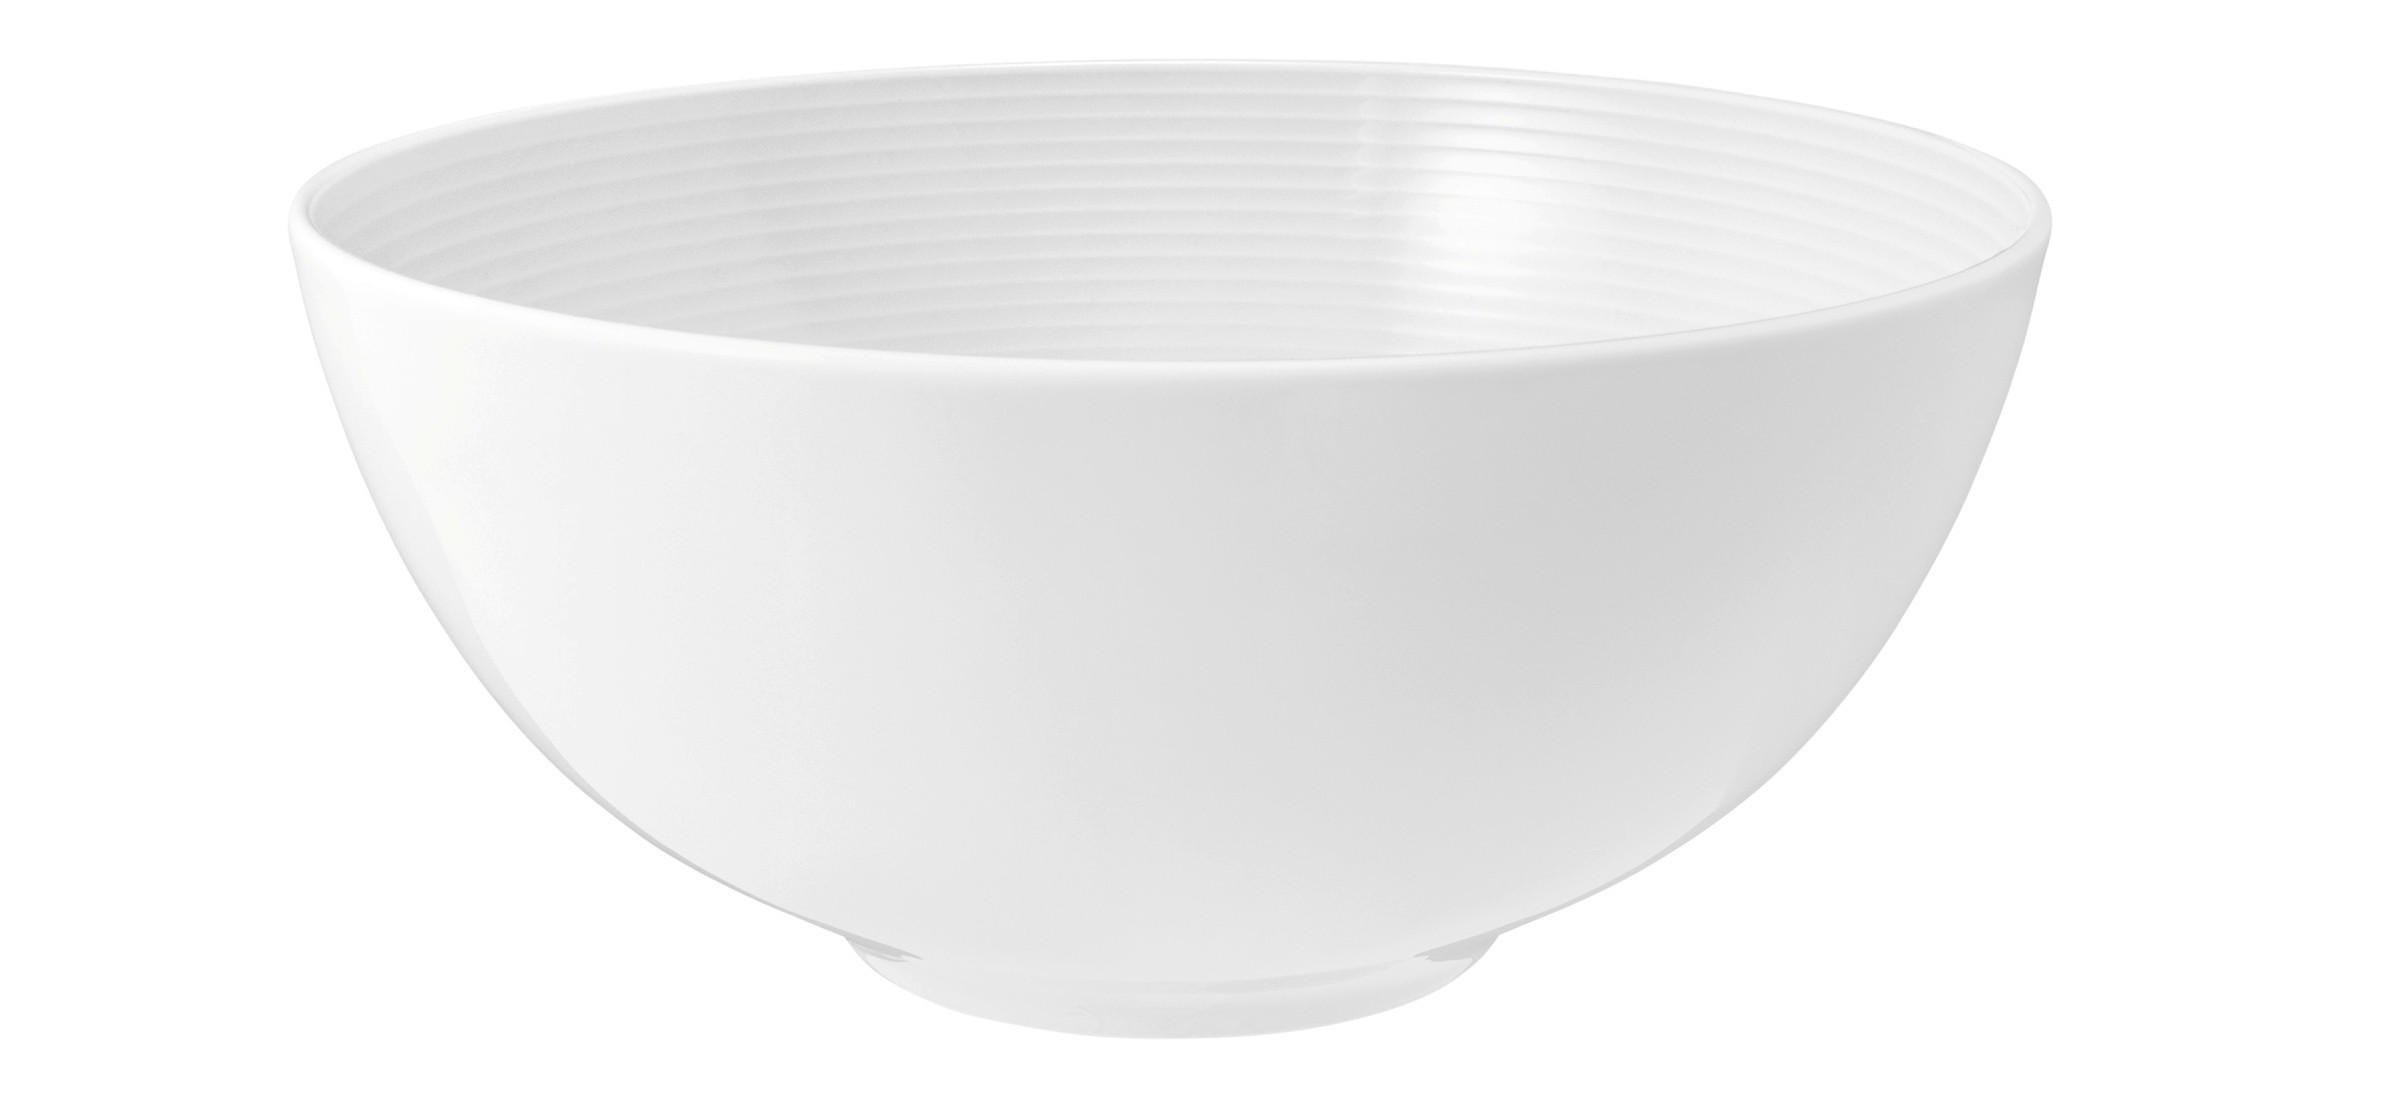 SCHÜSSEL Keramik Porzellan  - Weiß, Basics, Keramik (21,2cm) - Seltmann Weiden